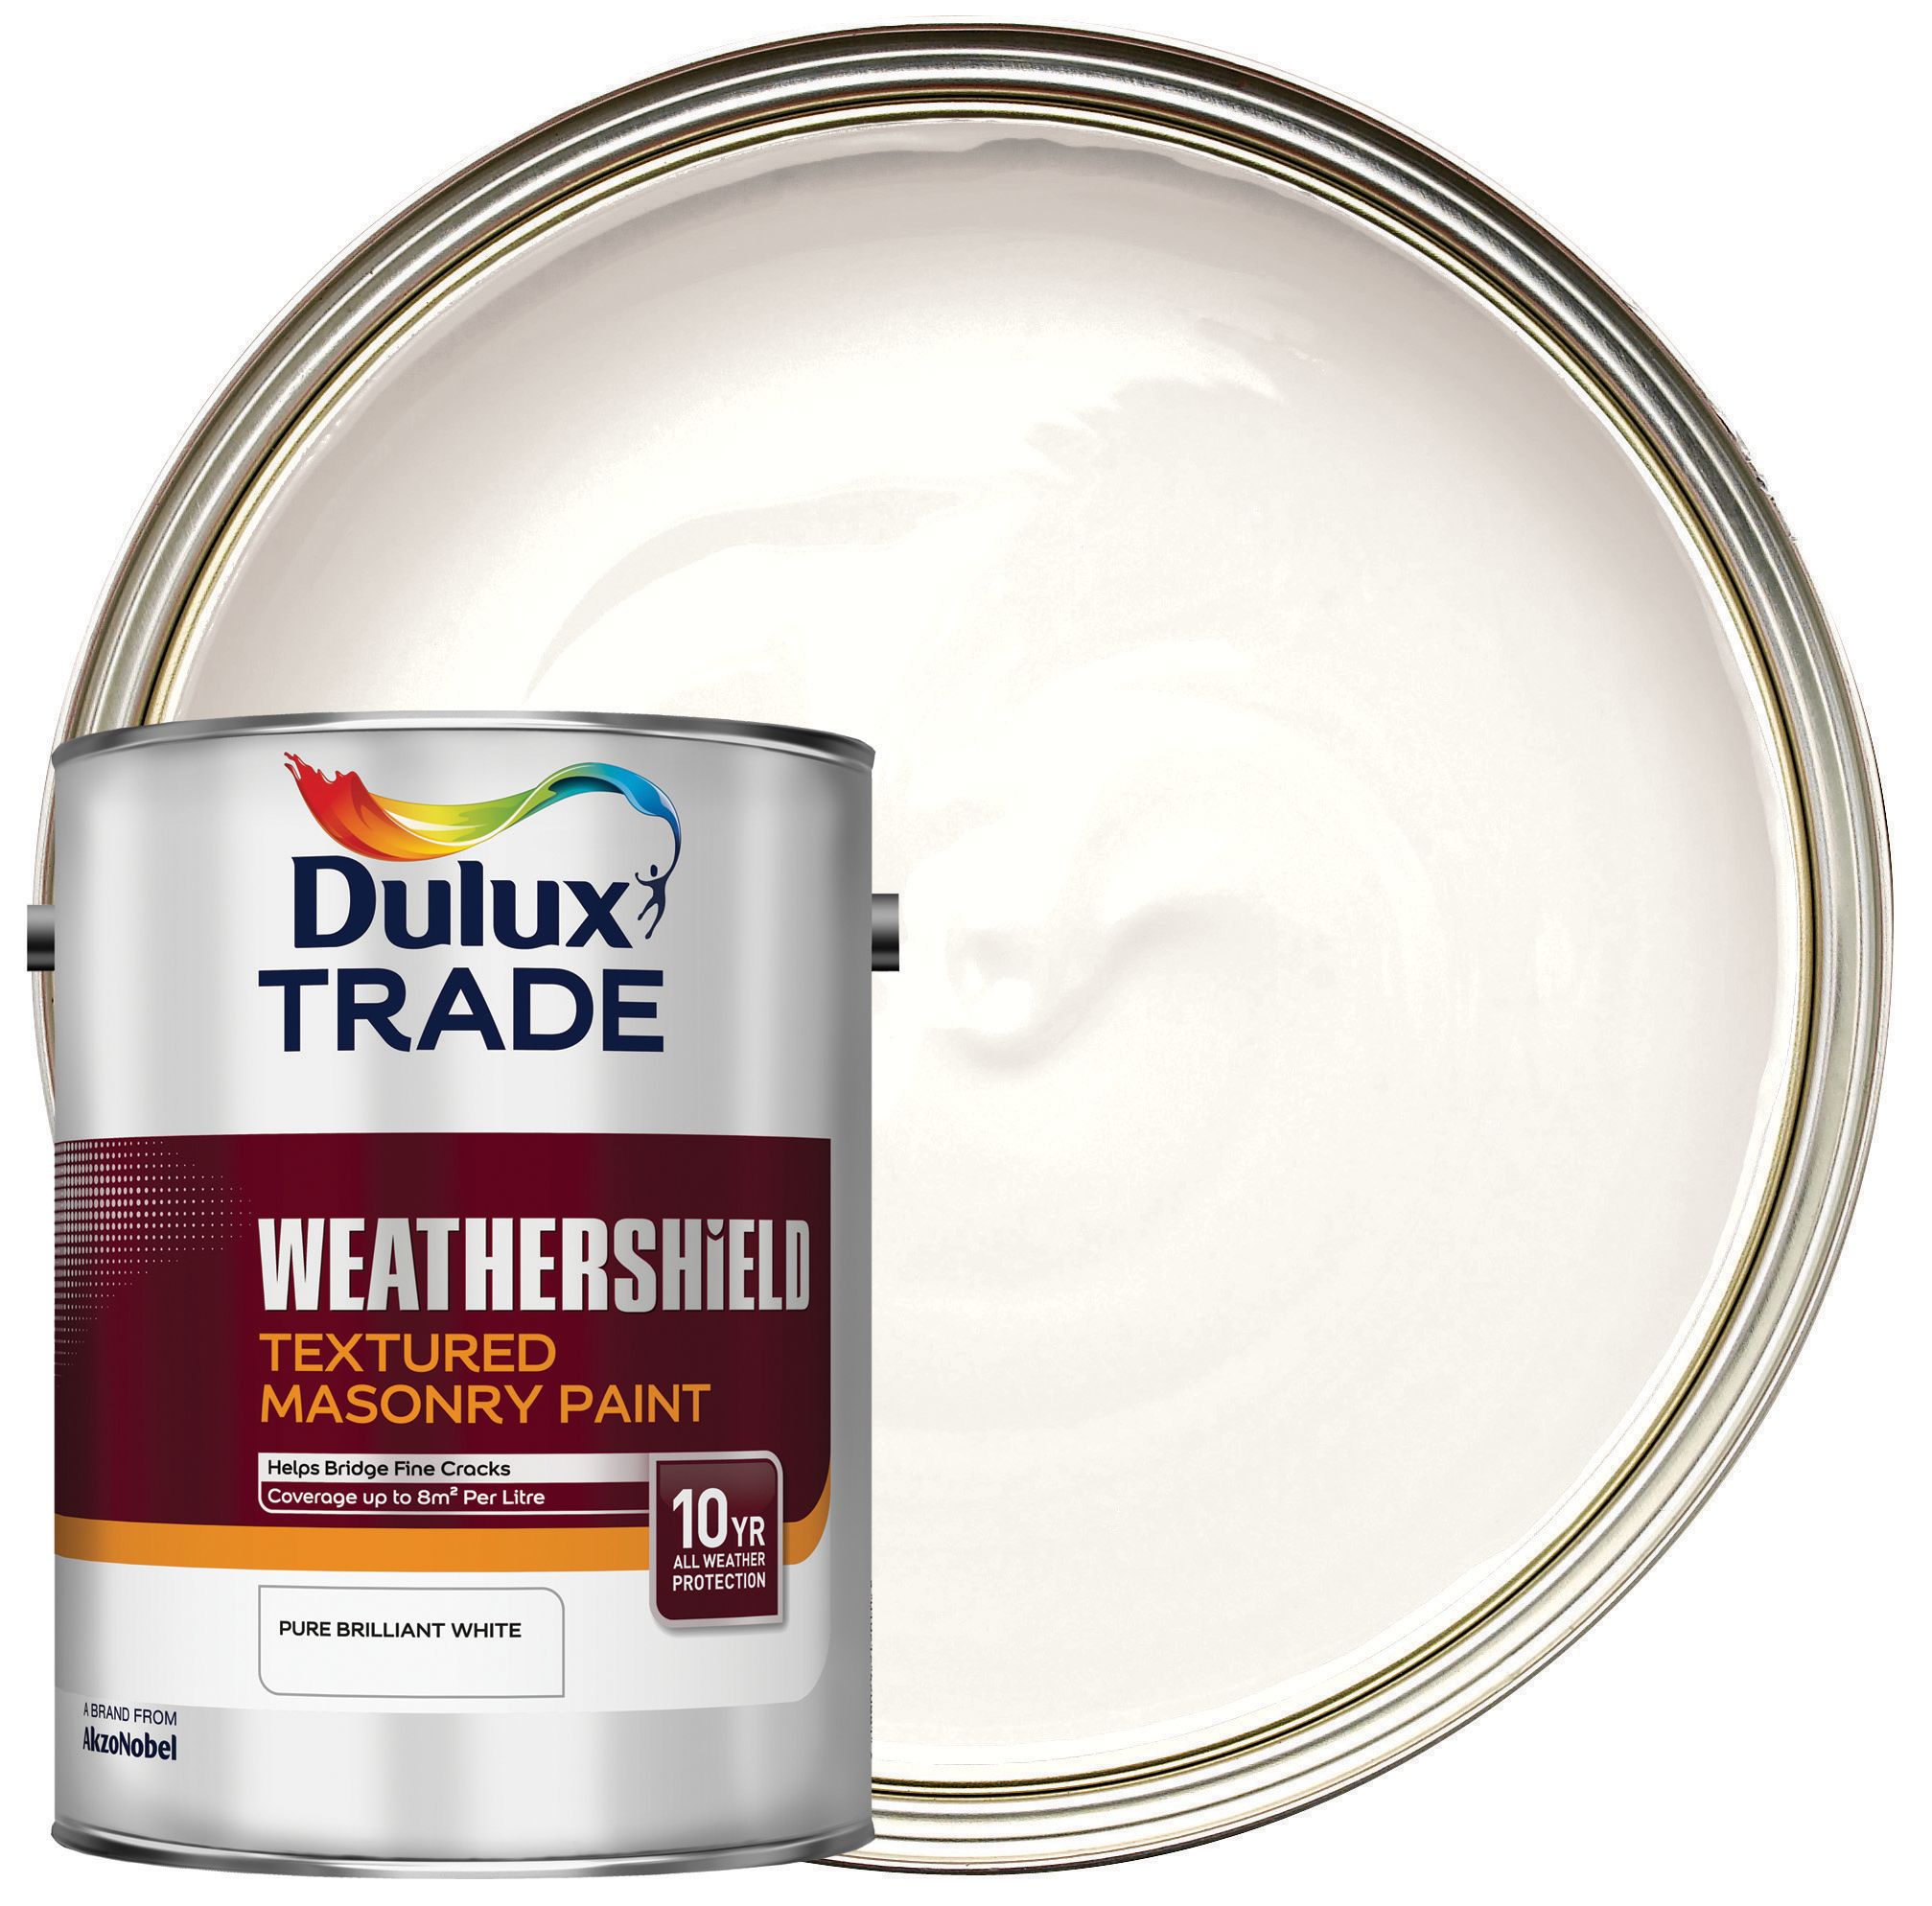 Dulux Trade Weathershield Textured Masonry Paint - Brilliant White 5L